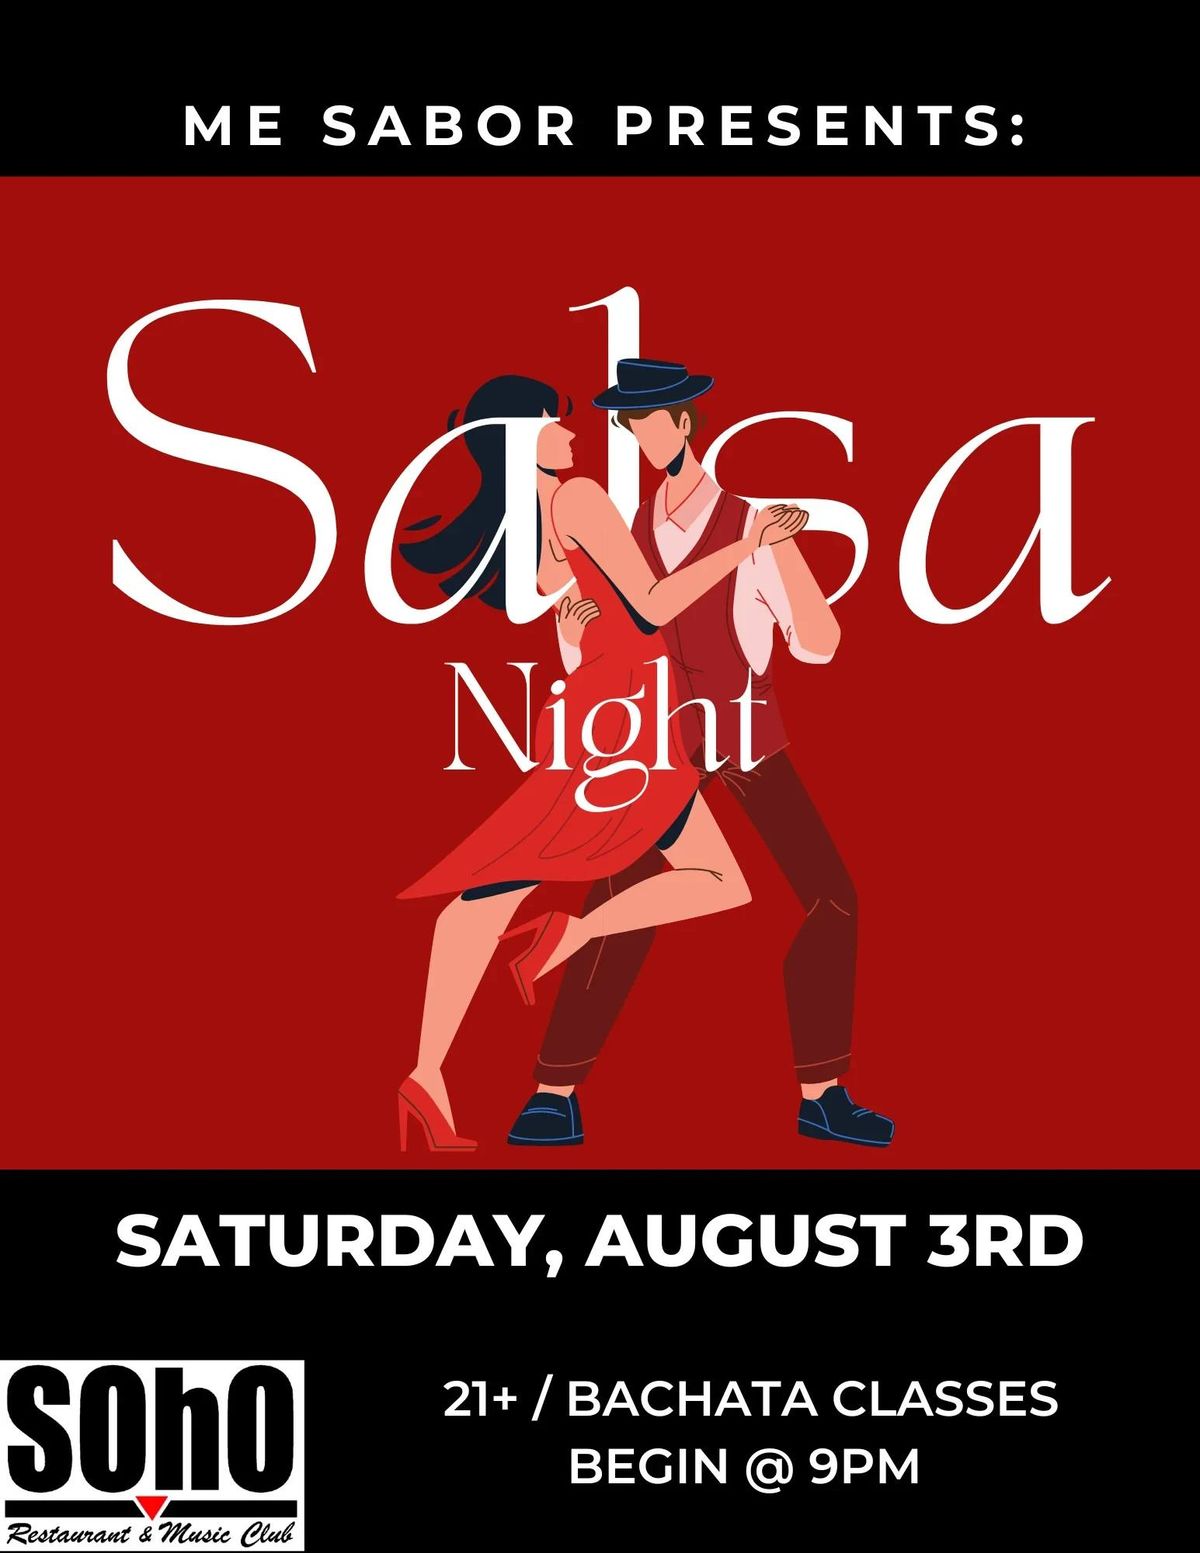 Me Sabor presents Salsa Night